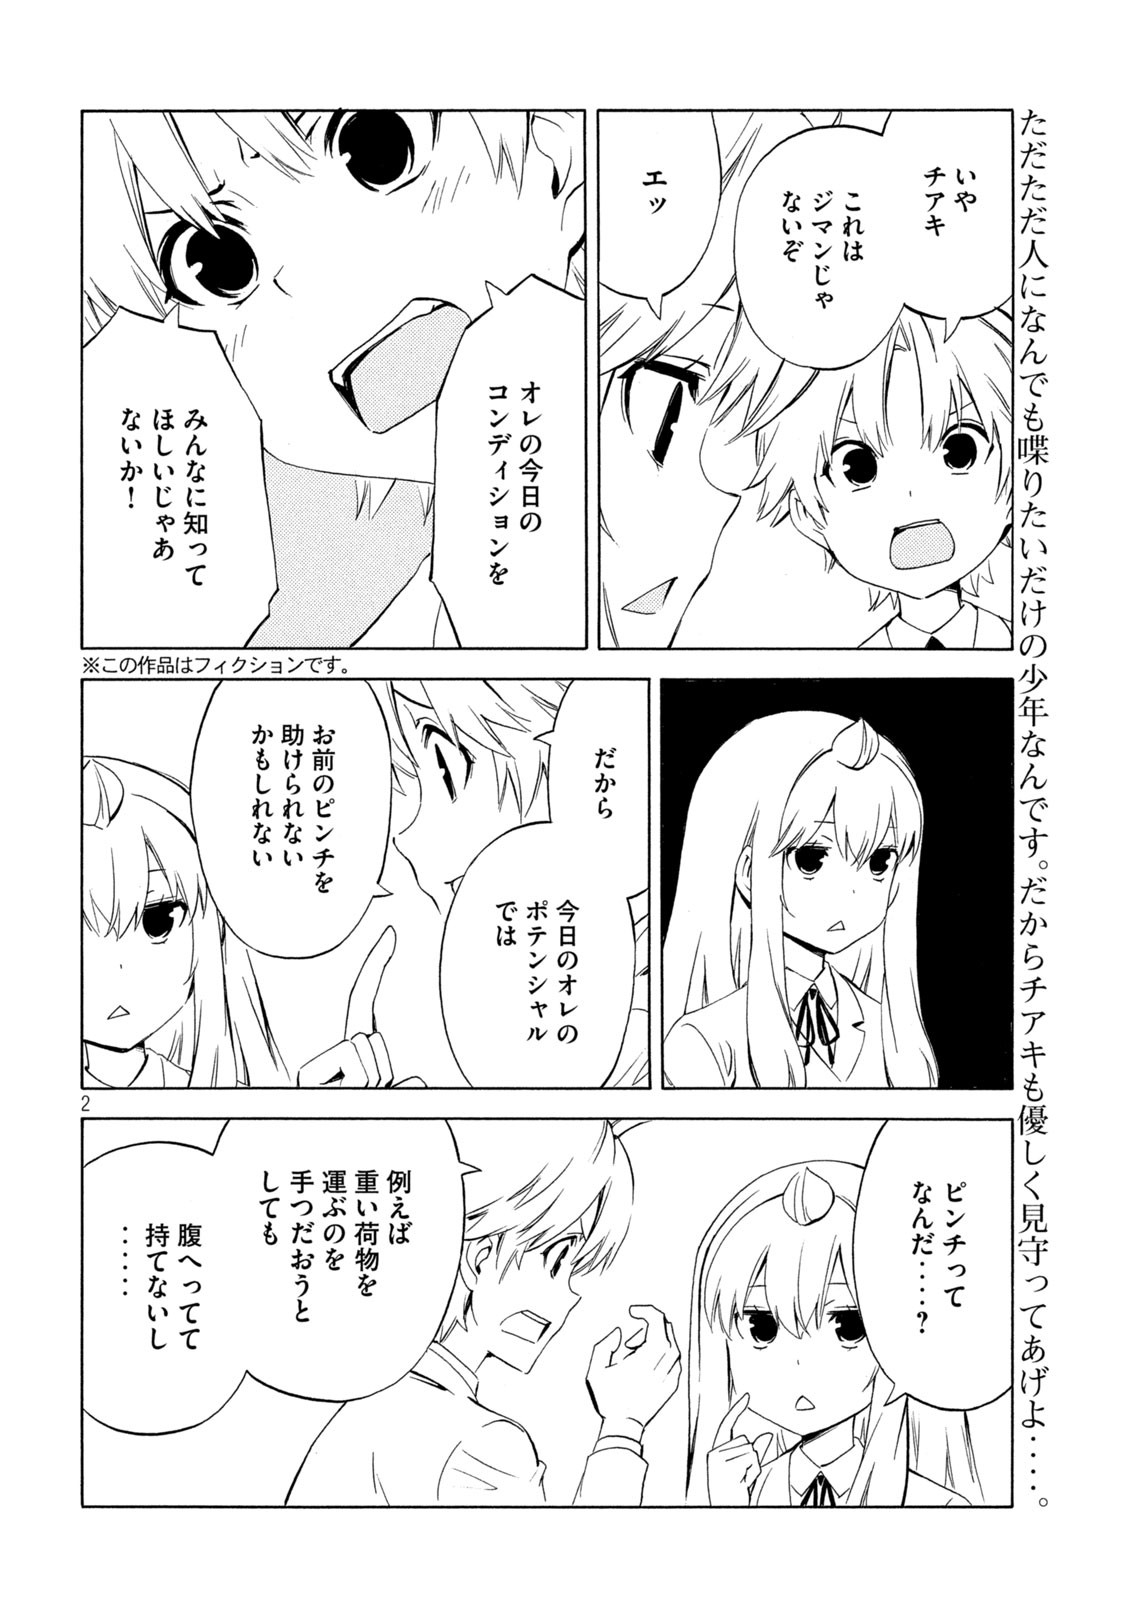 Minami-ke - Chapter 474 - Page 2